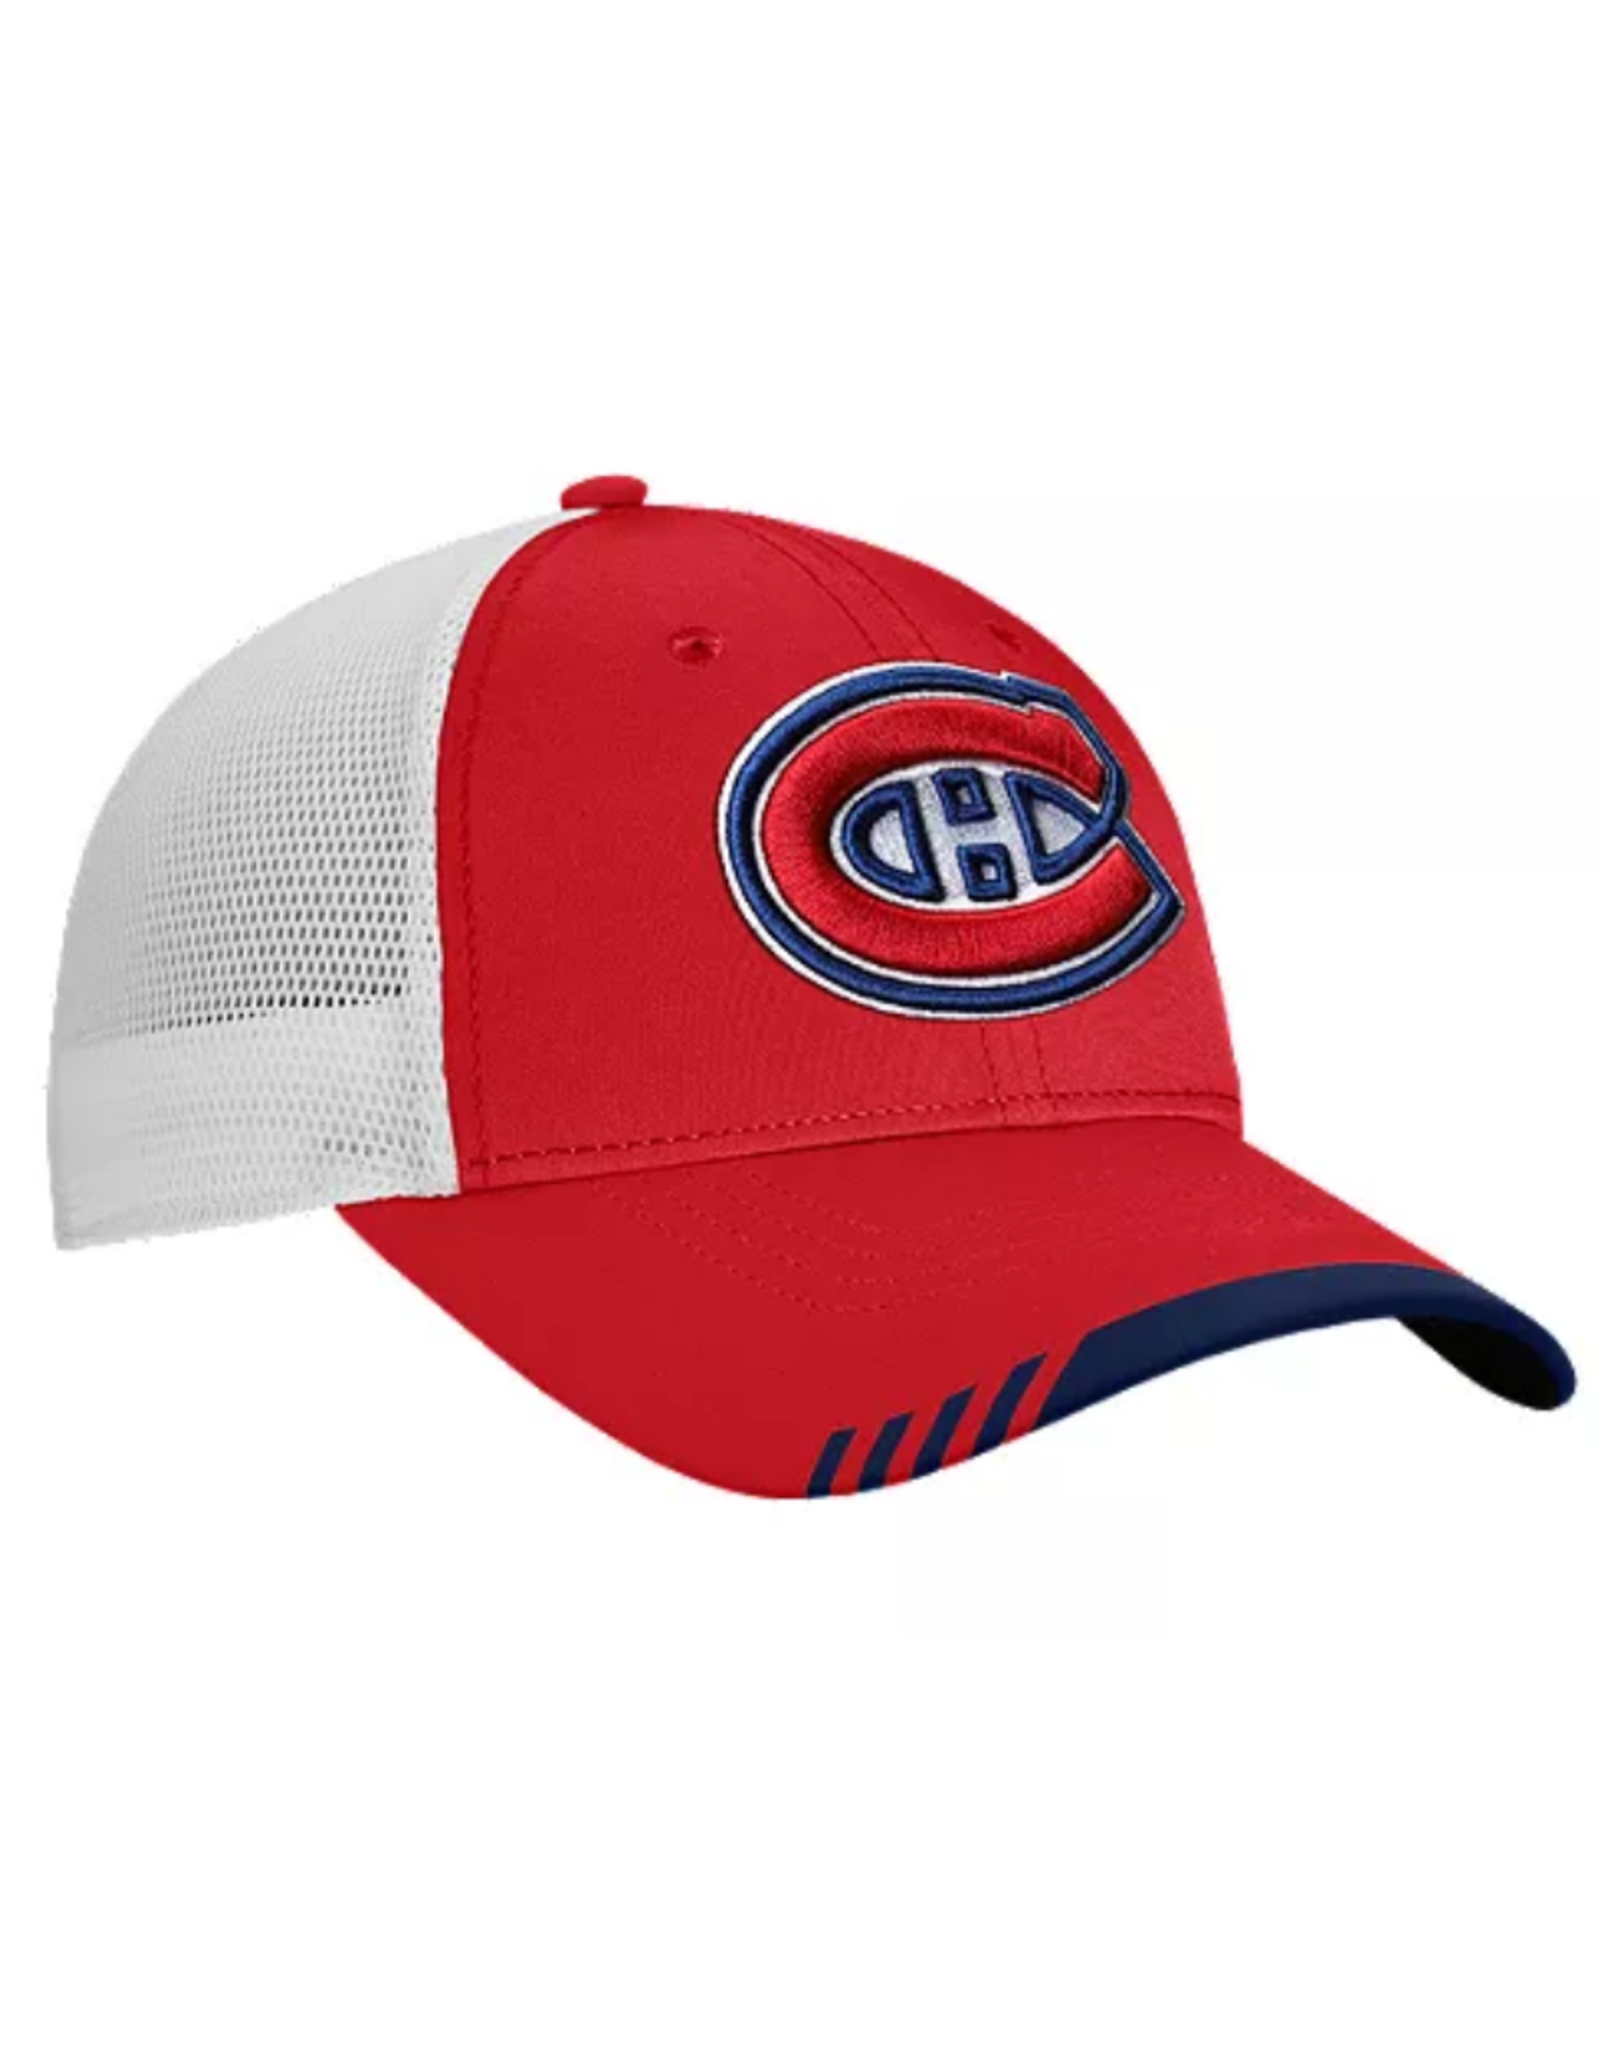 Fanatics Fanatics '21 Locker Room Adjustable Hat Montreal Canadiens Red/White